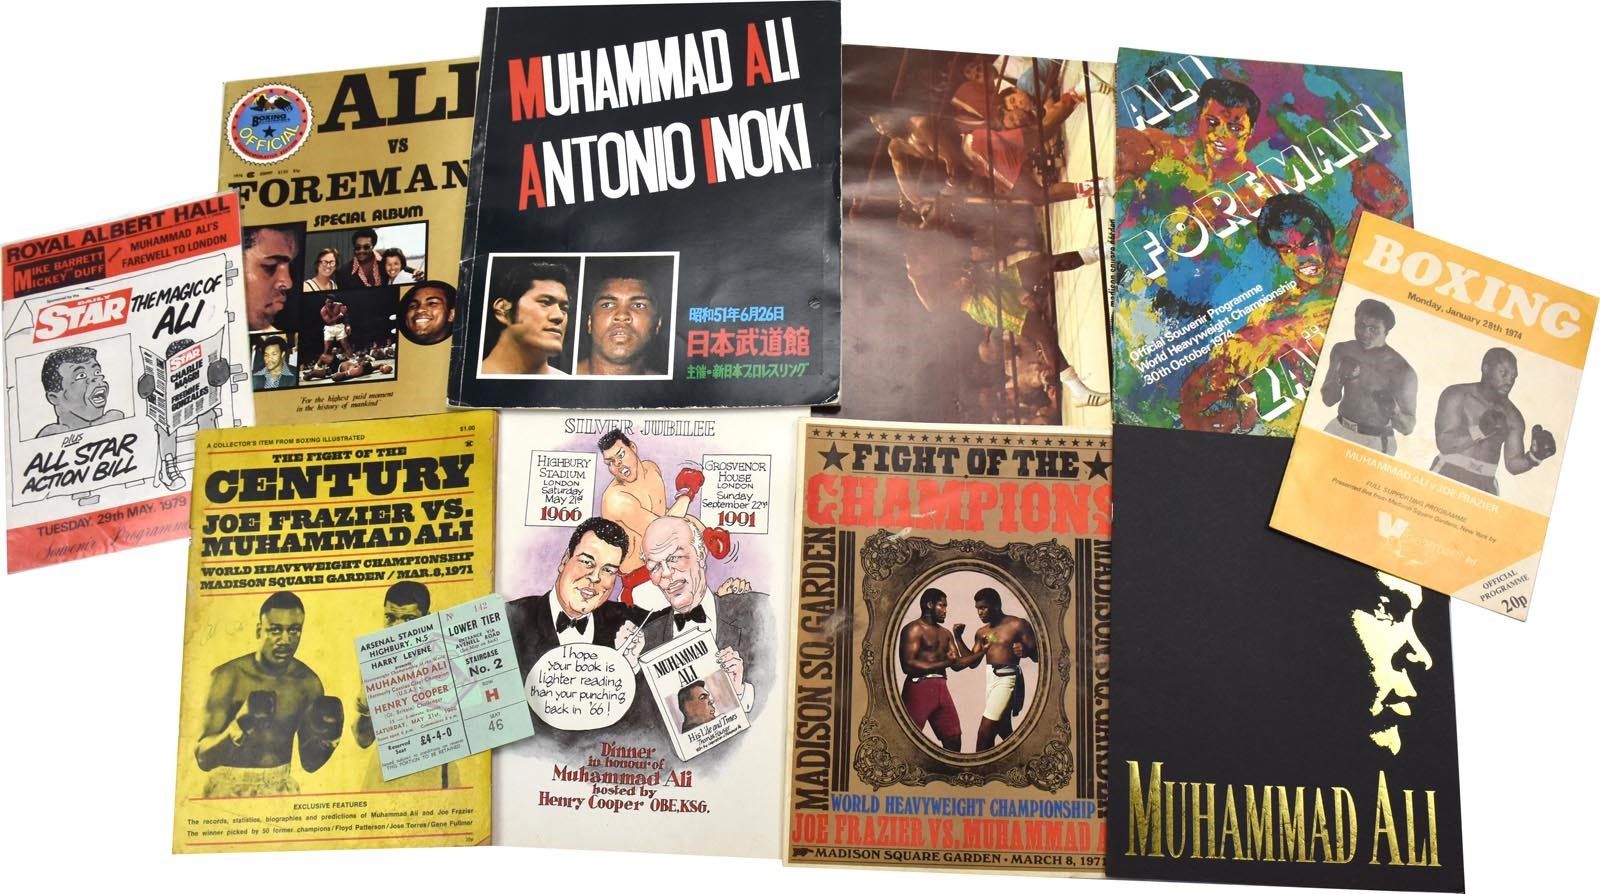 Muhammad Ali & Boxing - Muhammad Ali Program & Ticket Collection (12)